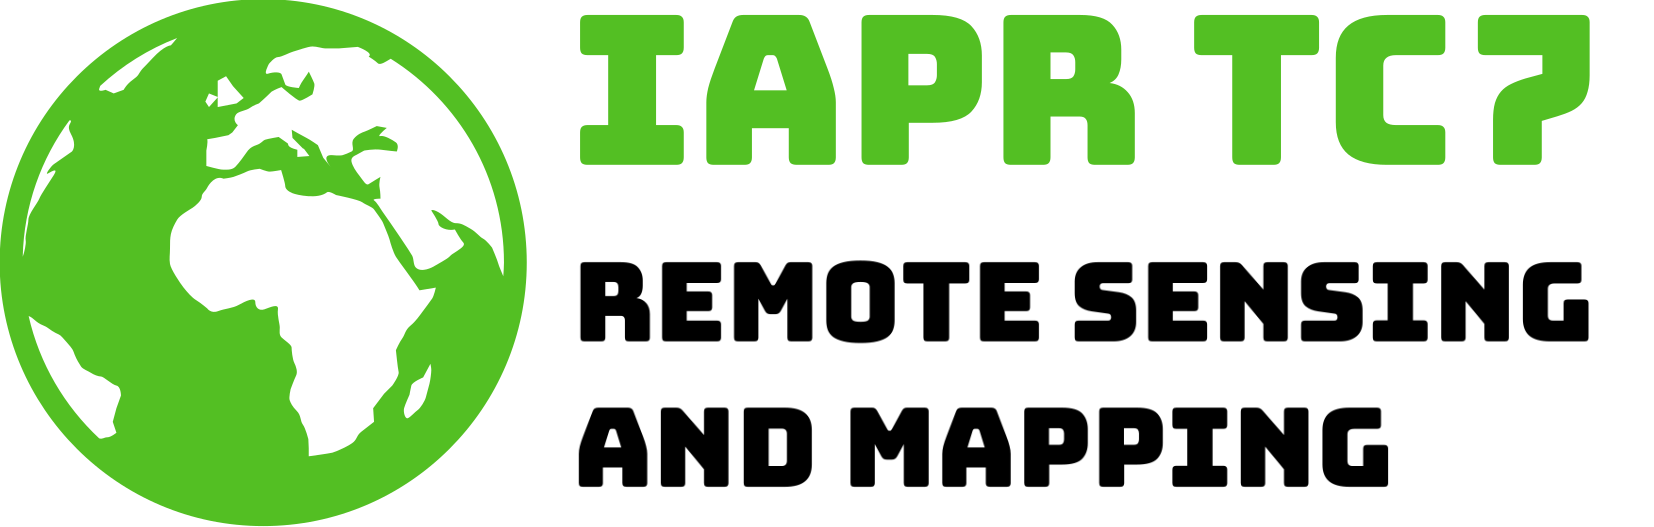 IAPR-TC7 logo